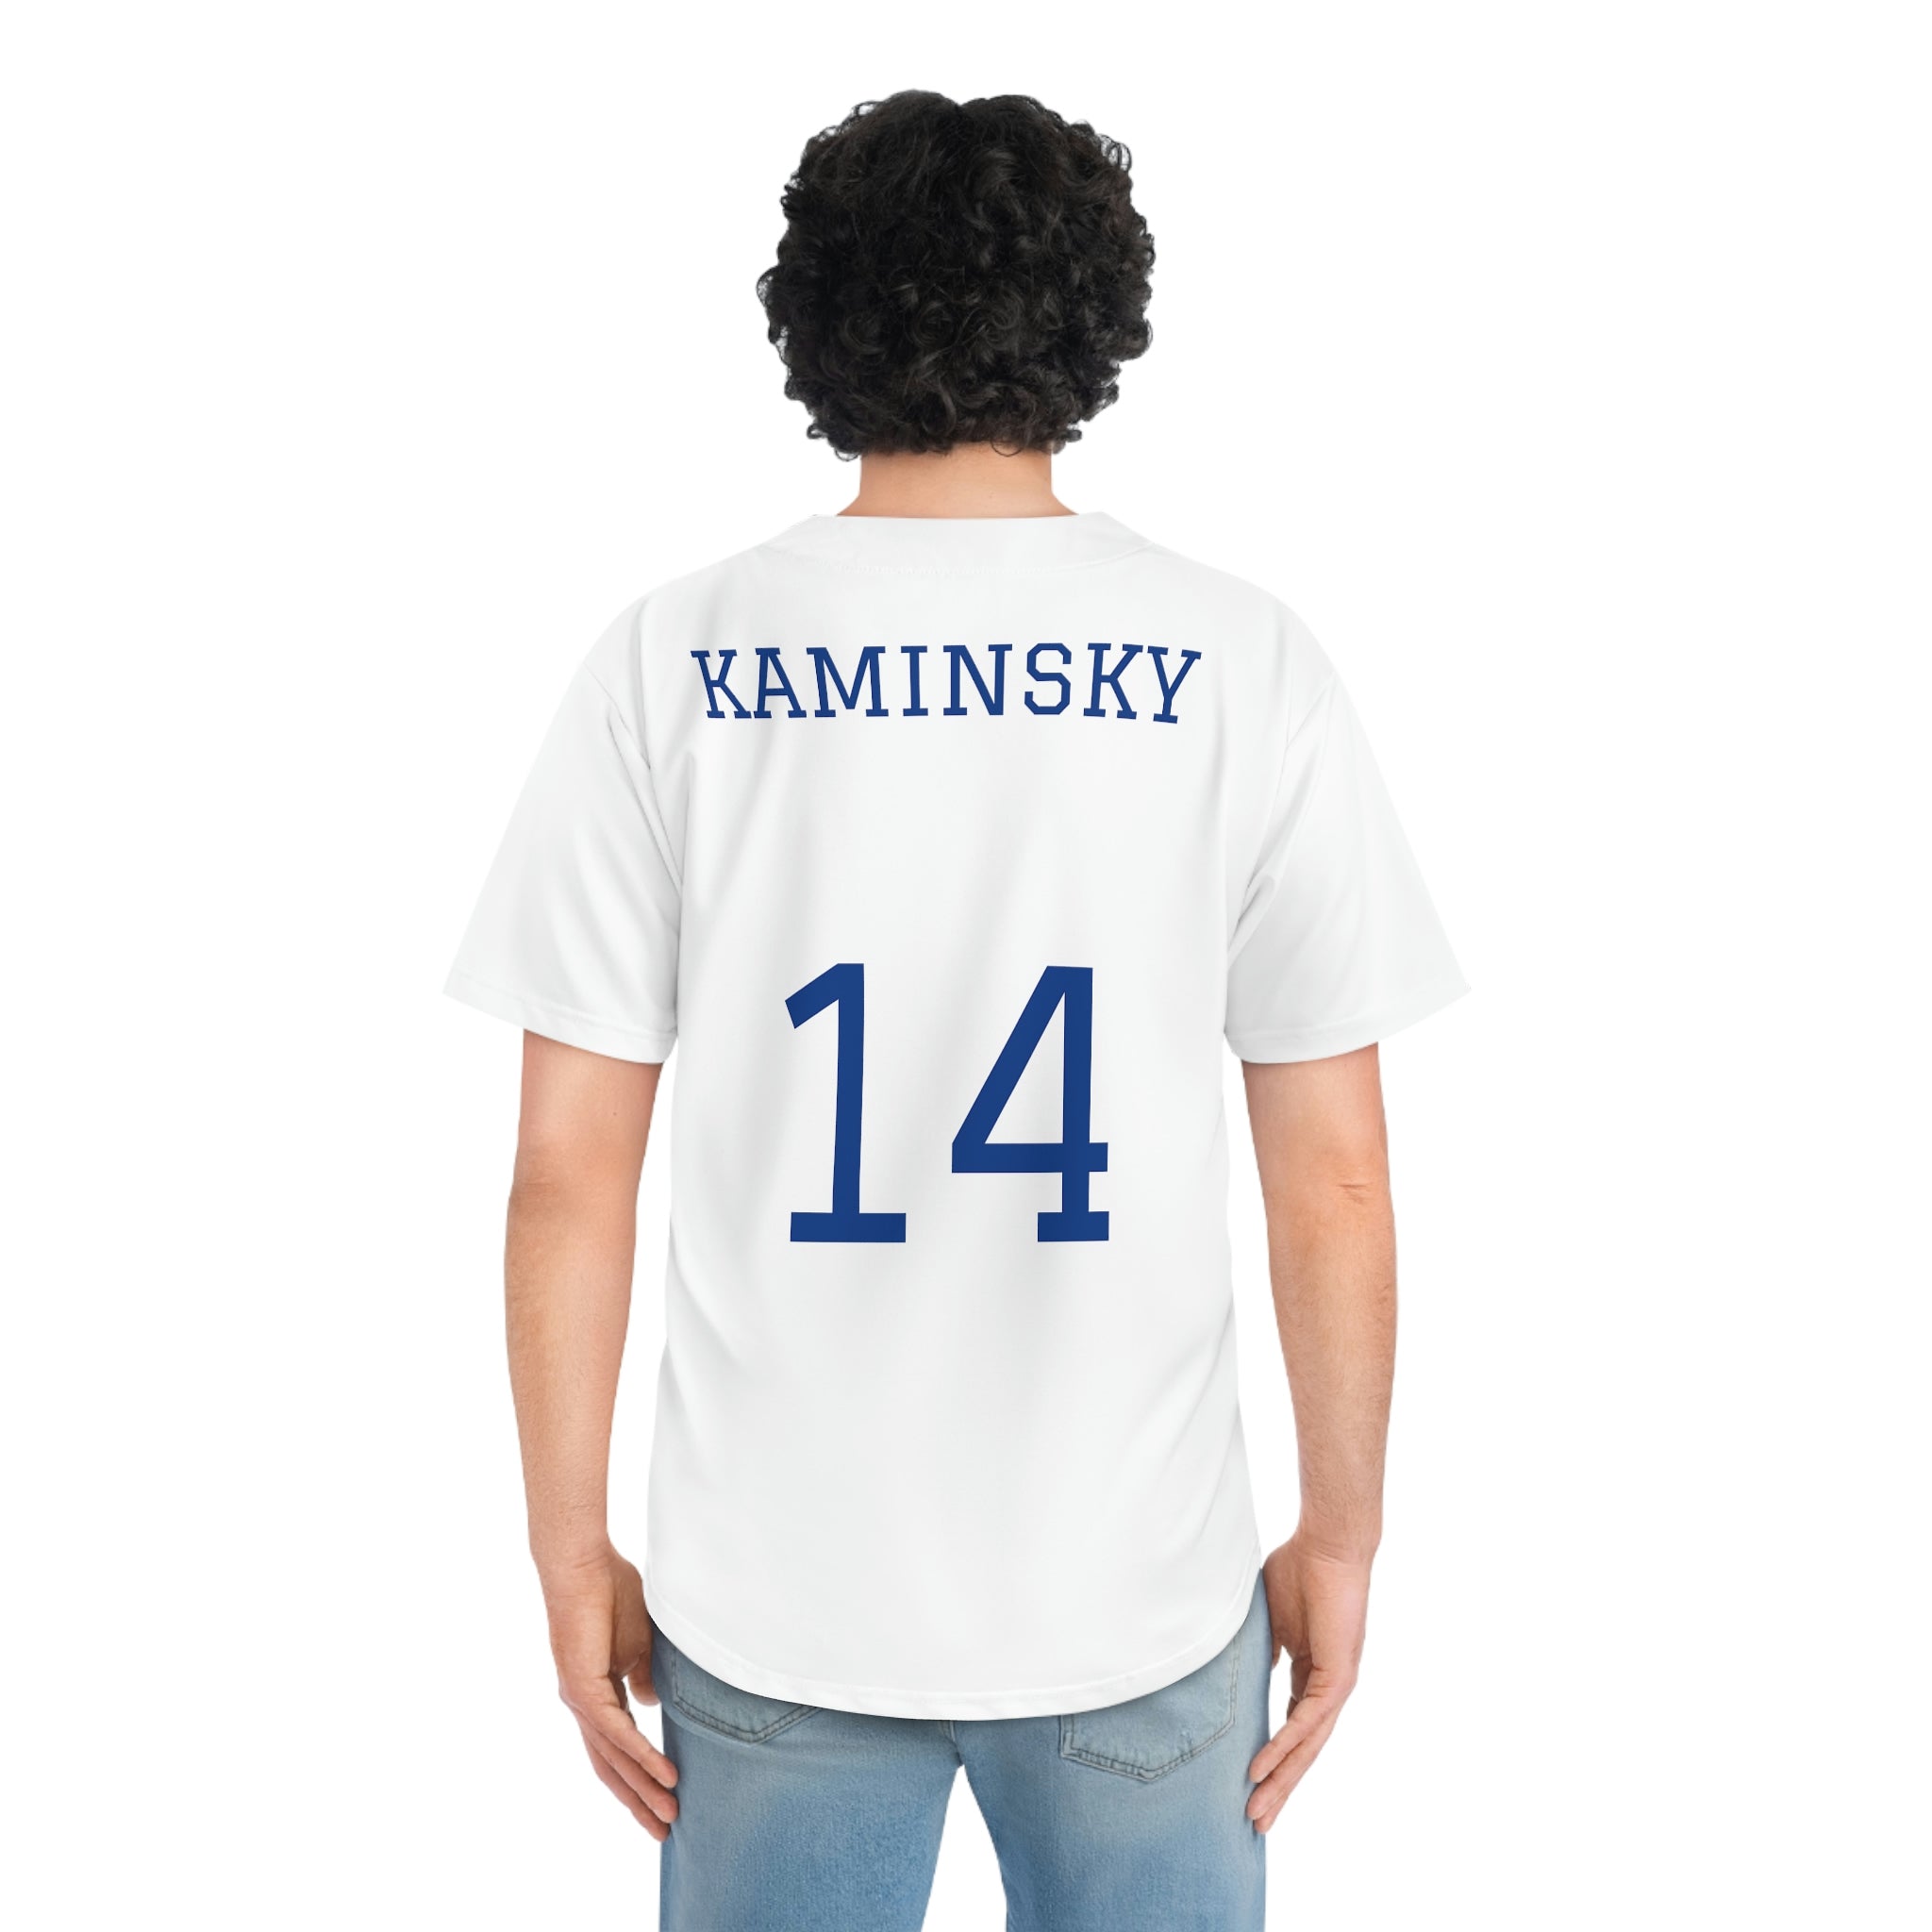 Captain Sam Kaminsky Baseball Jersey